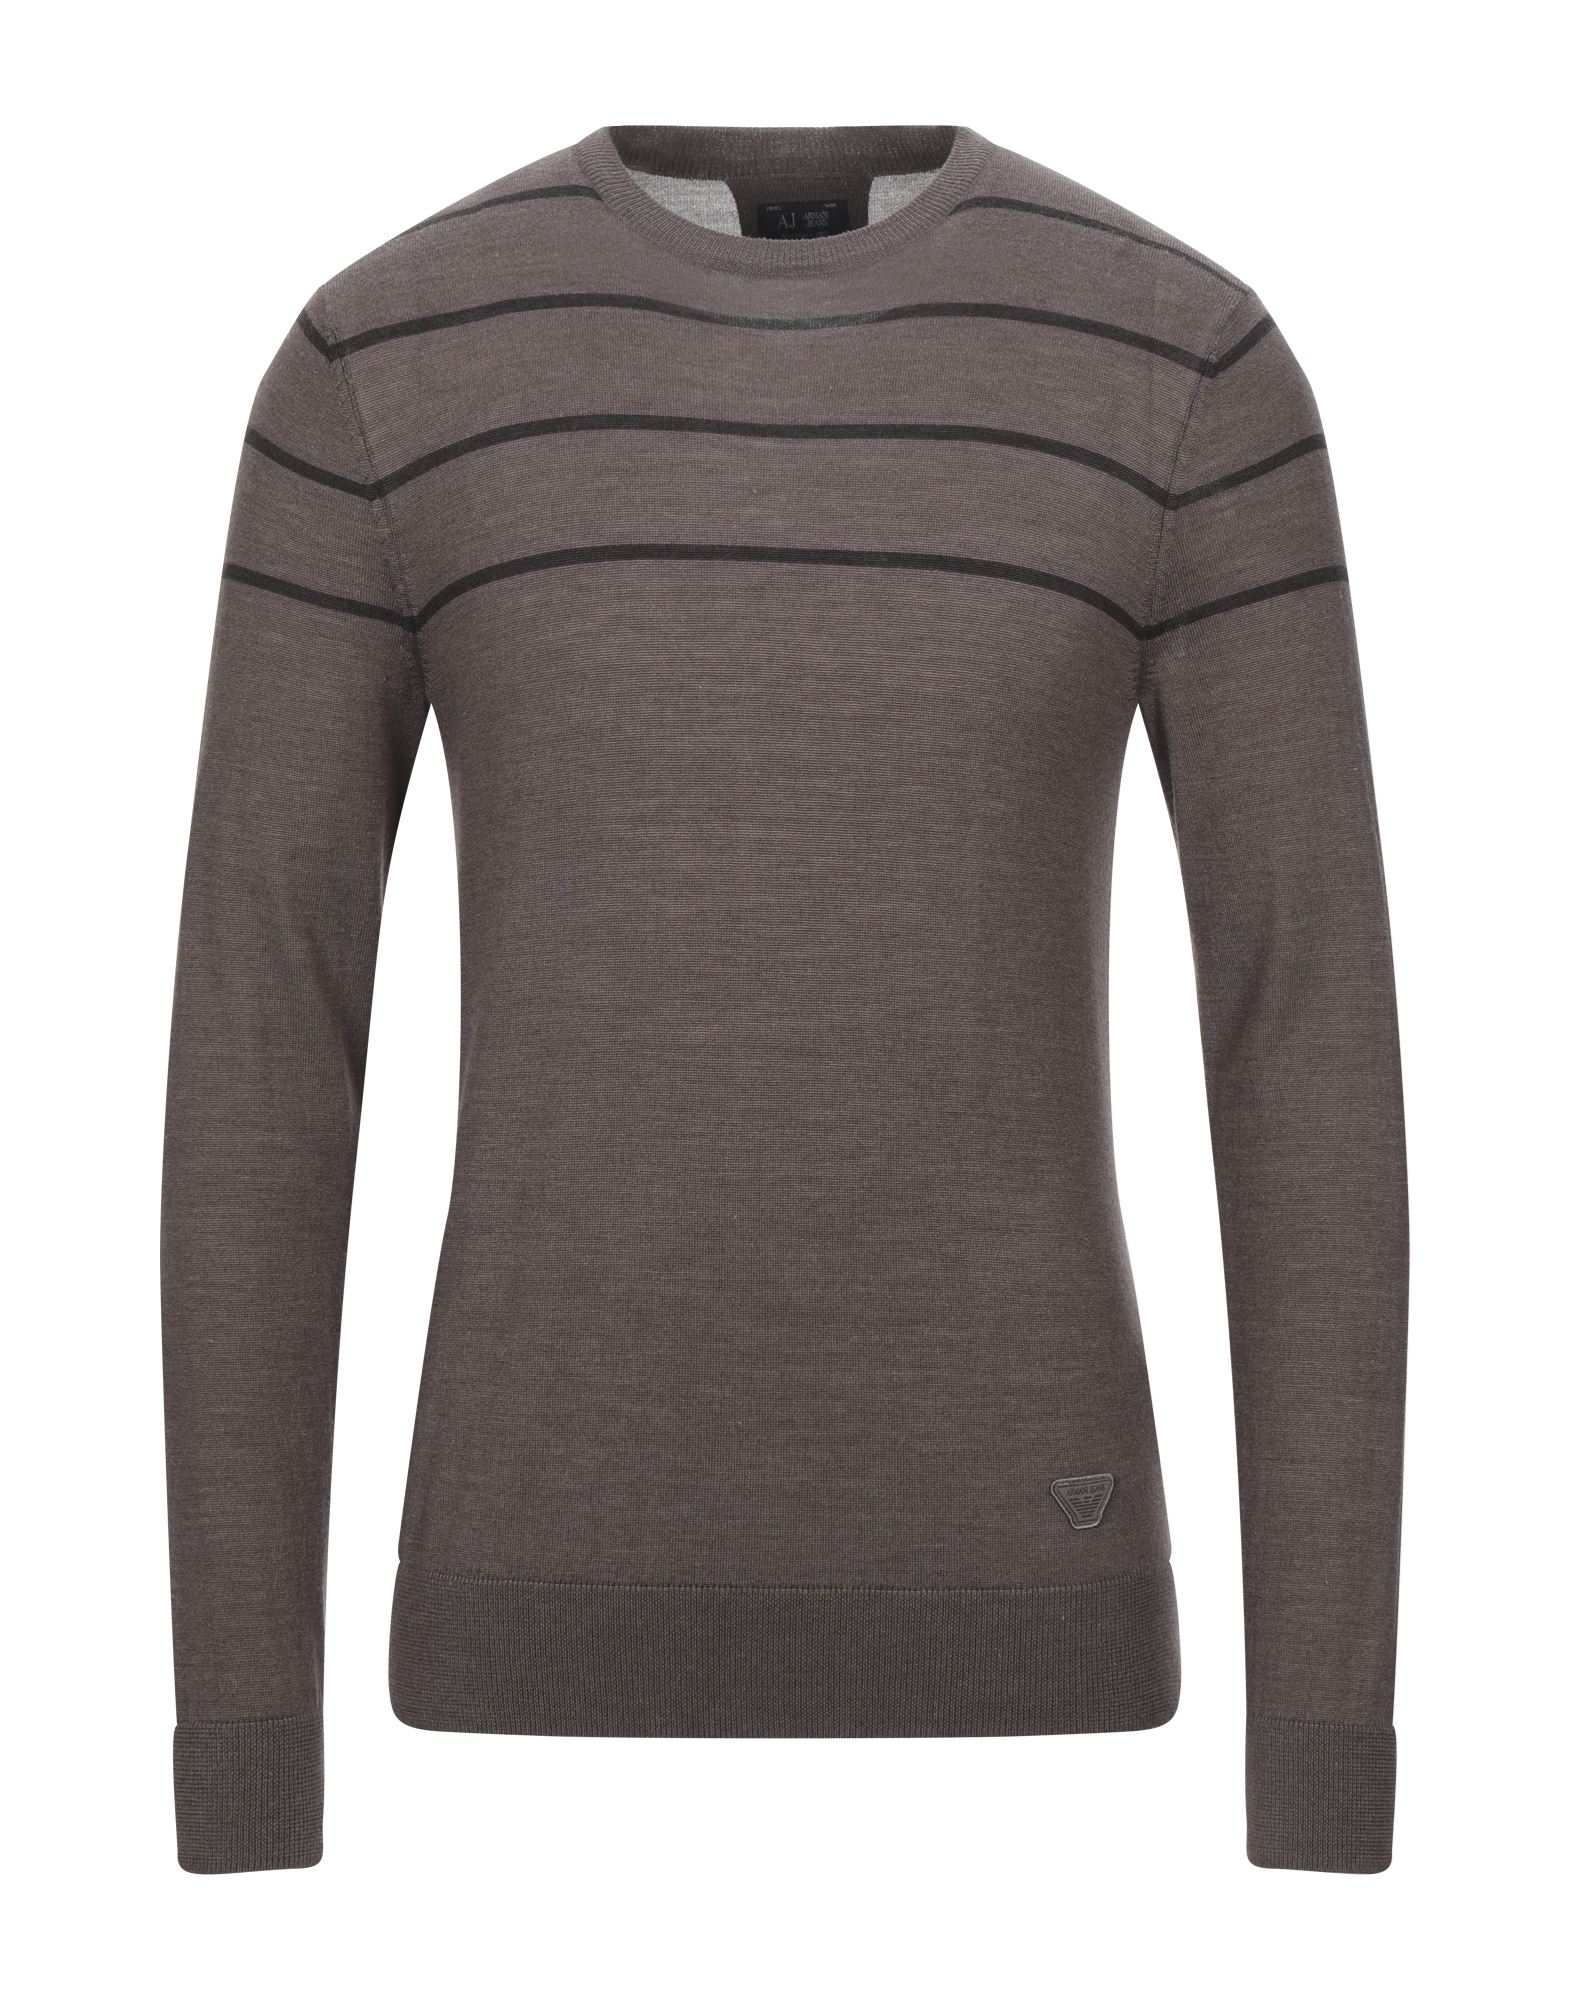 ARMANI JEANS Sweaters - Item 14096897